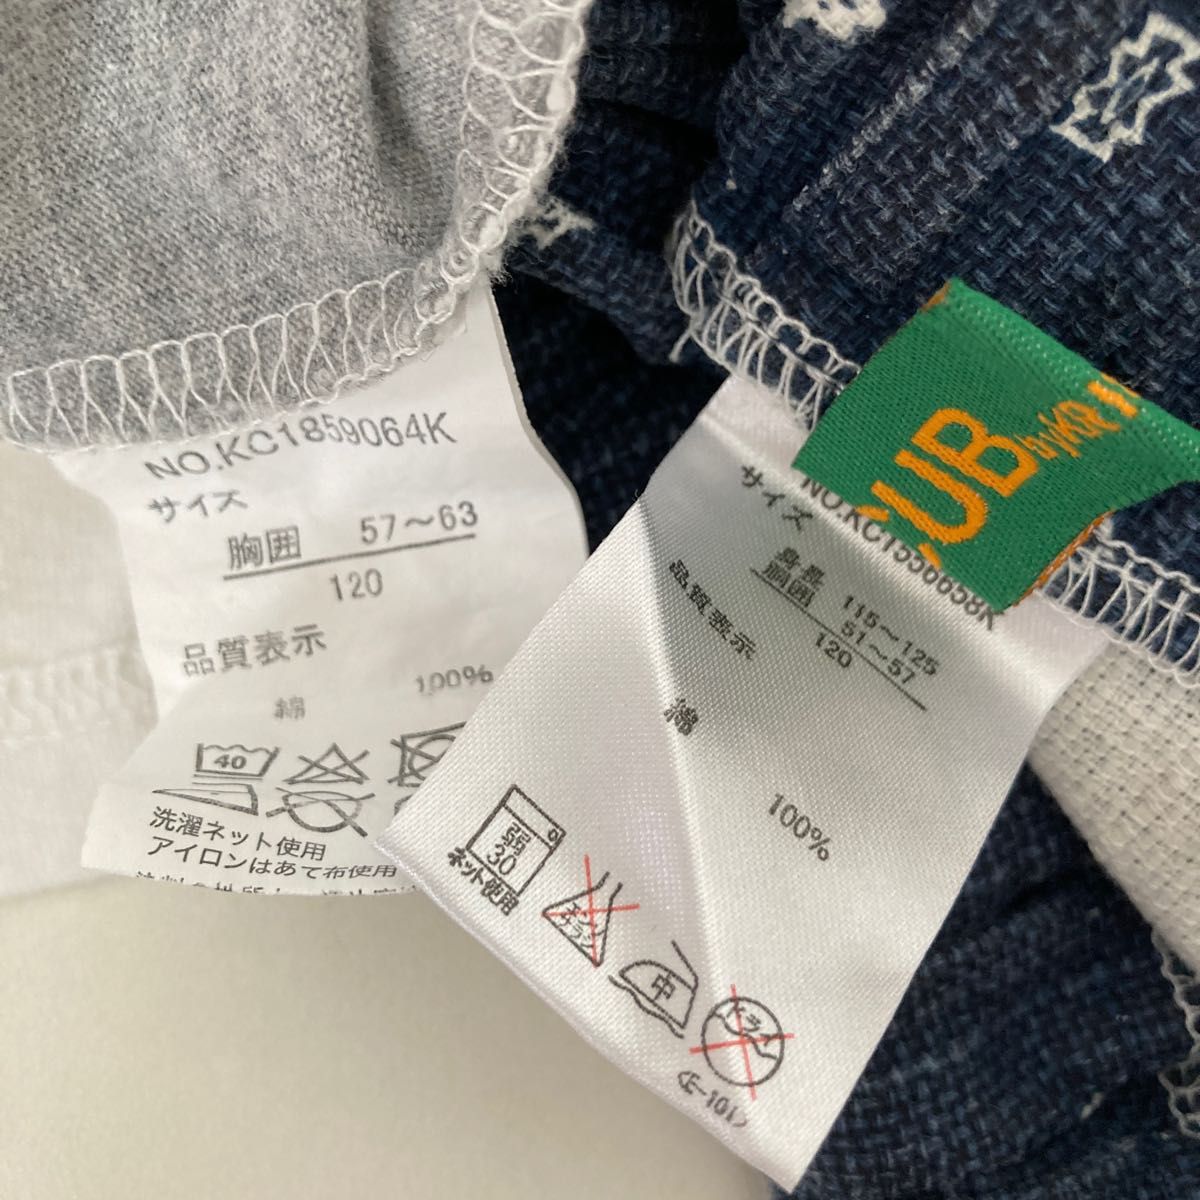 CUB by KRIFF MAYER  Tシャツ・ハーフパンツ 120半ズボン 半袖Tシャツ 男児 子供服